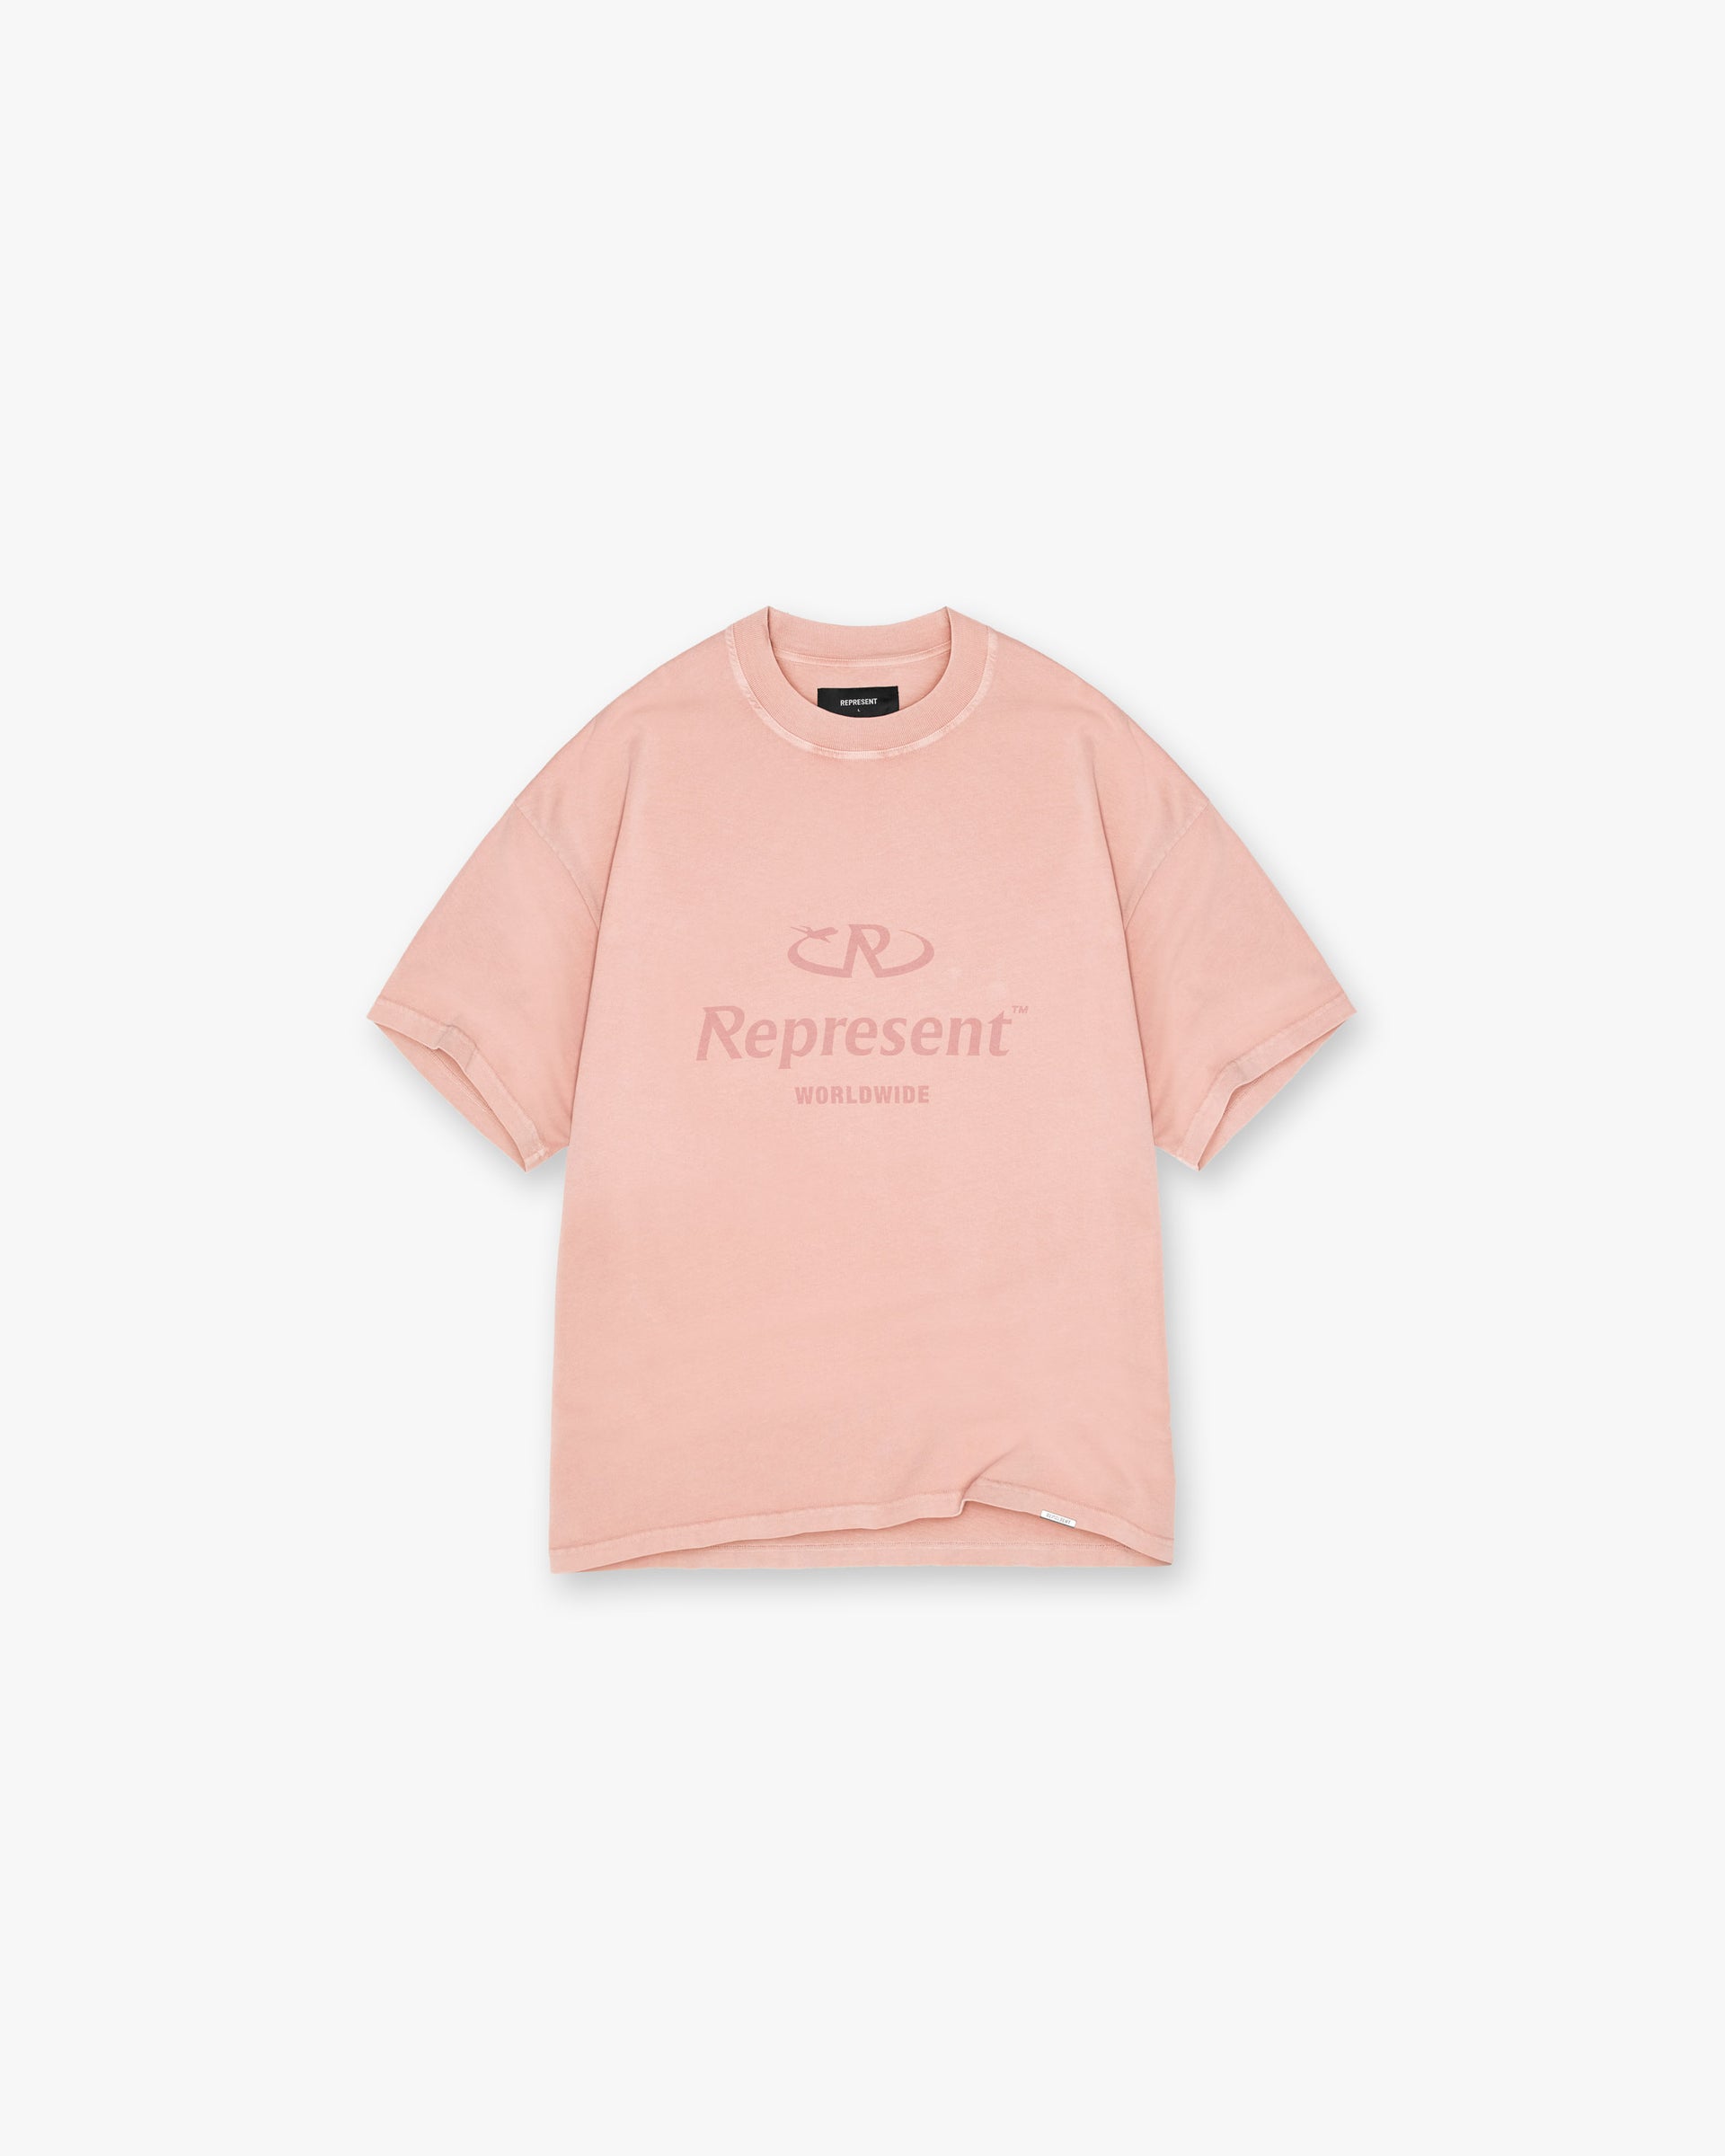 Worldwide T-Shirt | Pink T-Shirts SC23 | Represent Clo